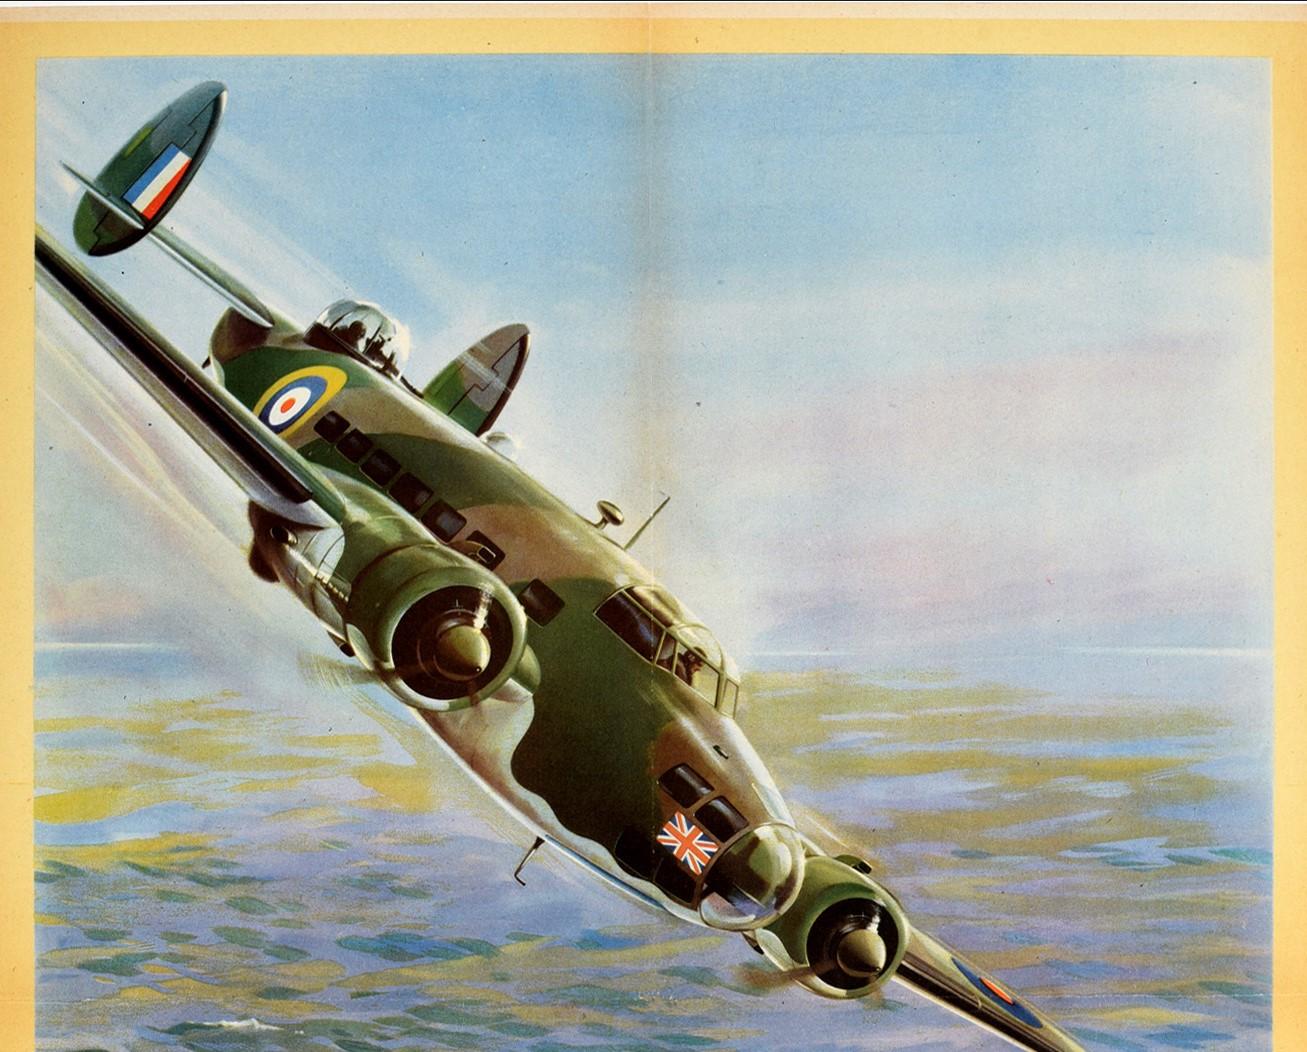 Original Vintage WWII Poster RAF Coastal Command Lockheed Hudson Submarine Uboat - Print by W. Krogman